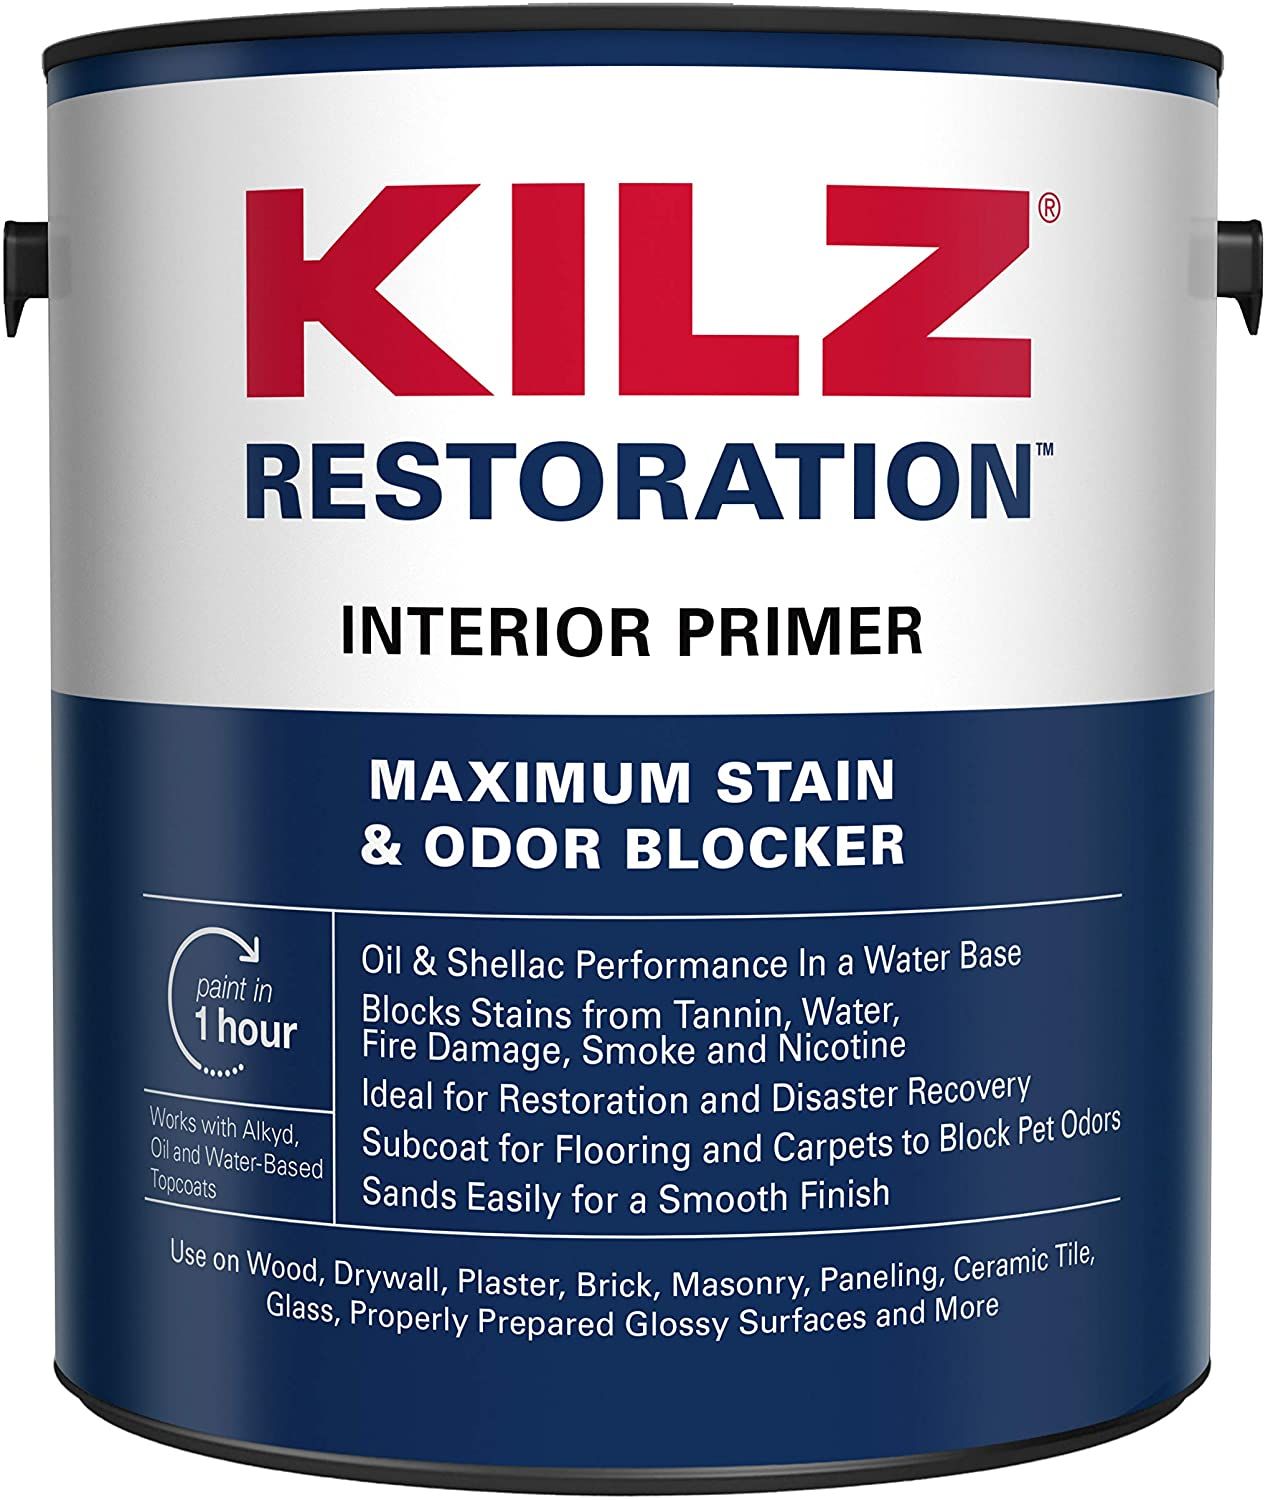 KILZ Restoration Interior Primer